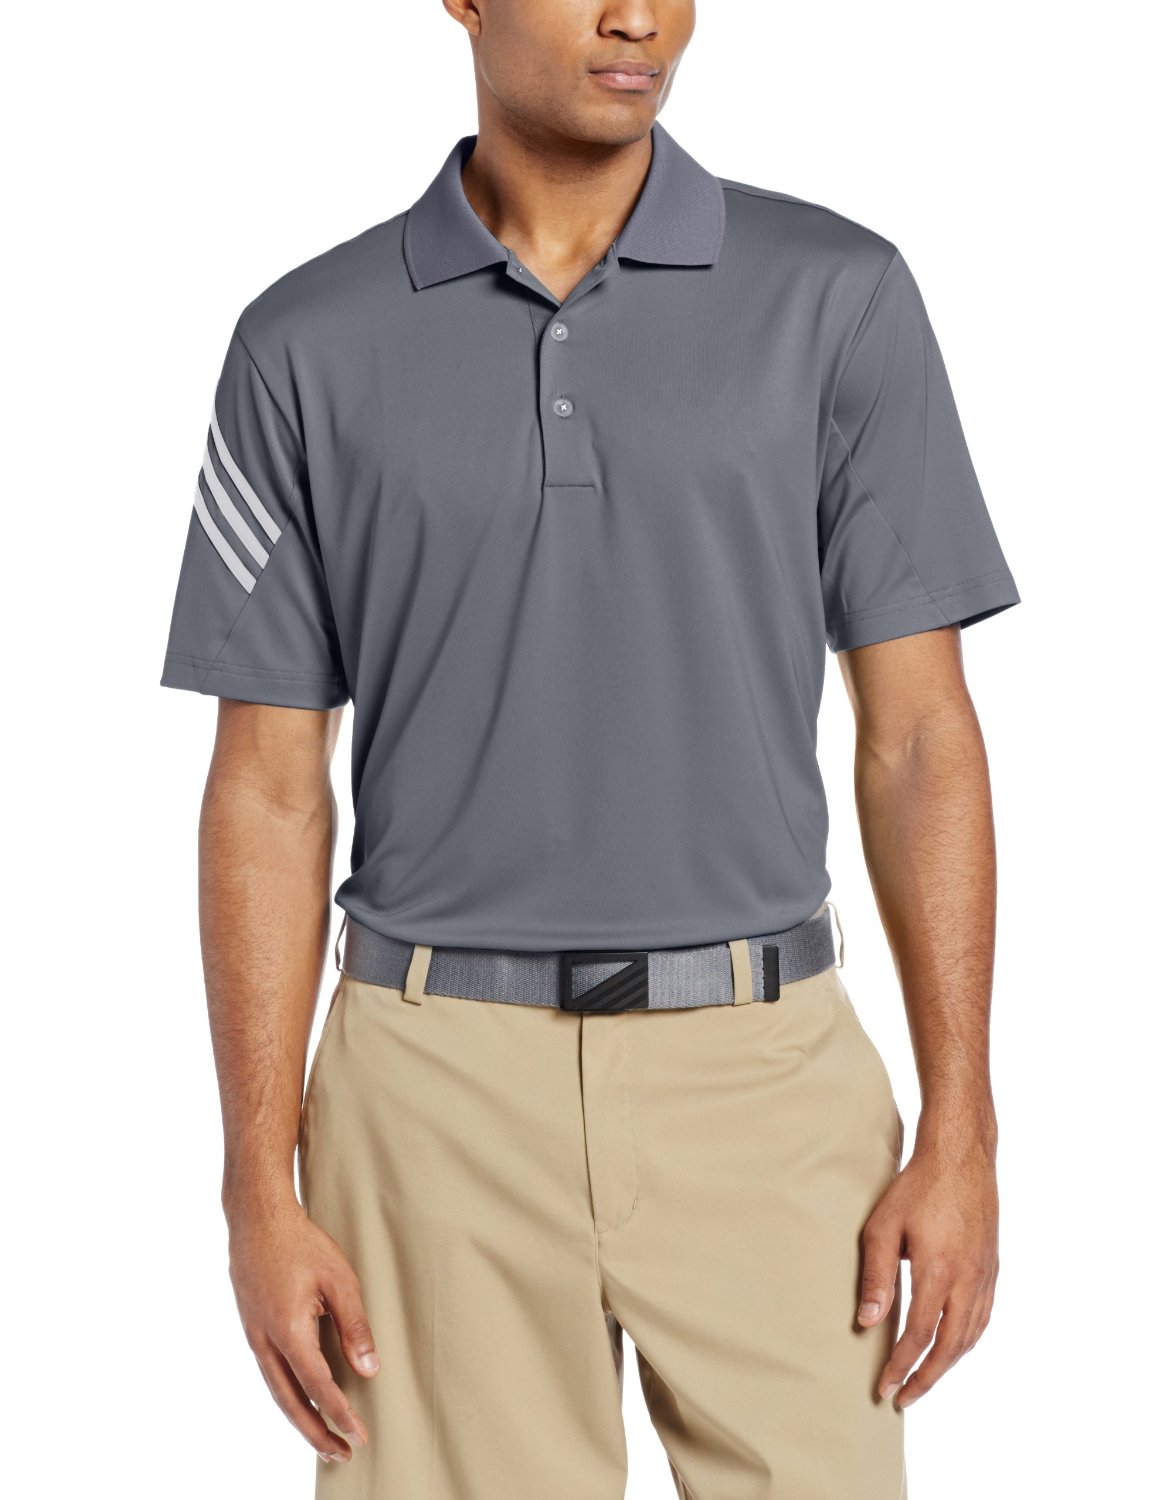 Mens Adidas Puremotion Climacool 3 Stripes Sleeve Golf Polo Shirts